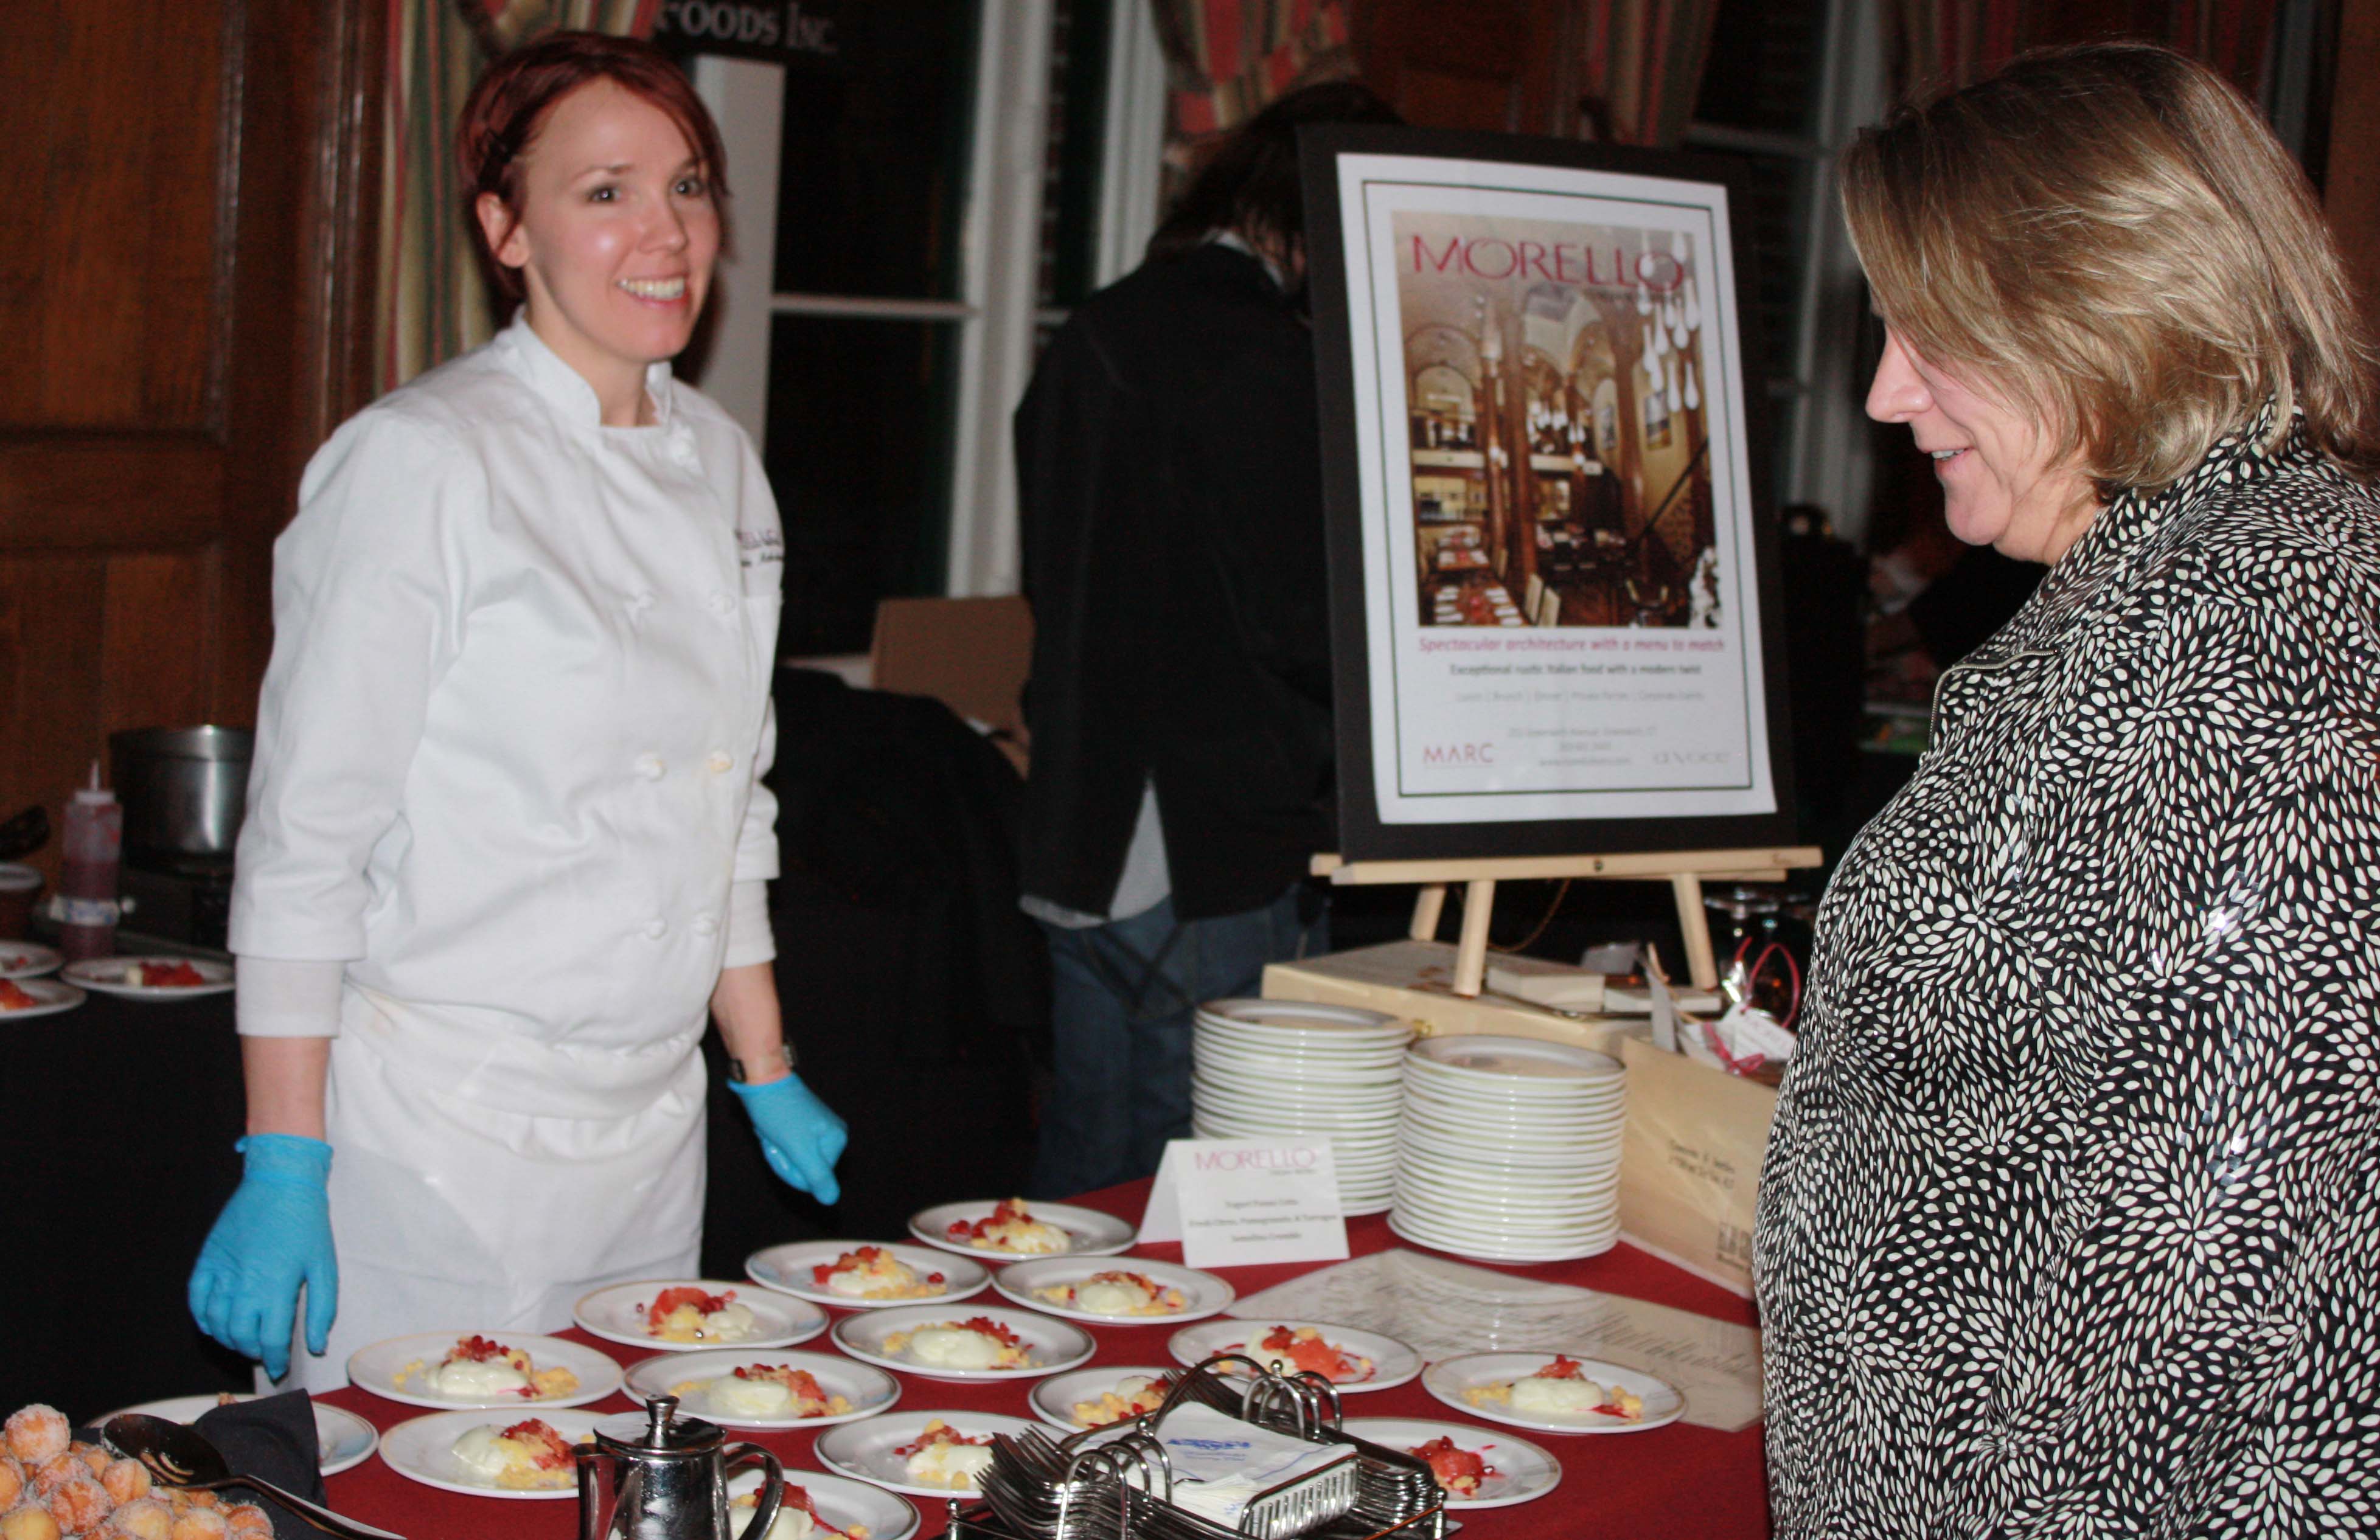 Morello chef Amanda Atkinson serves yogurt panna cotta at Greenwich Hospital’s annual Great Chefs fundraiser.